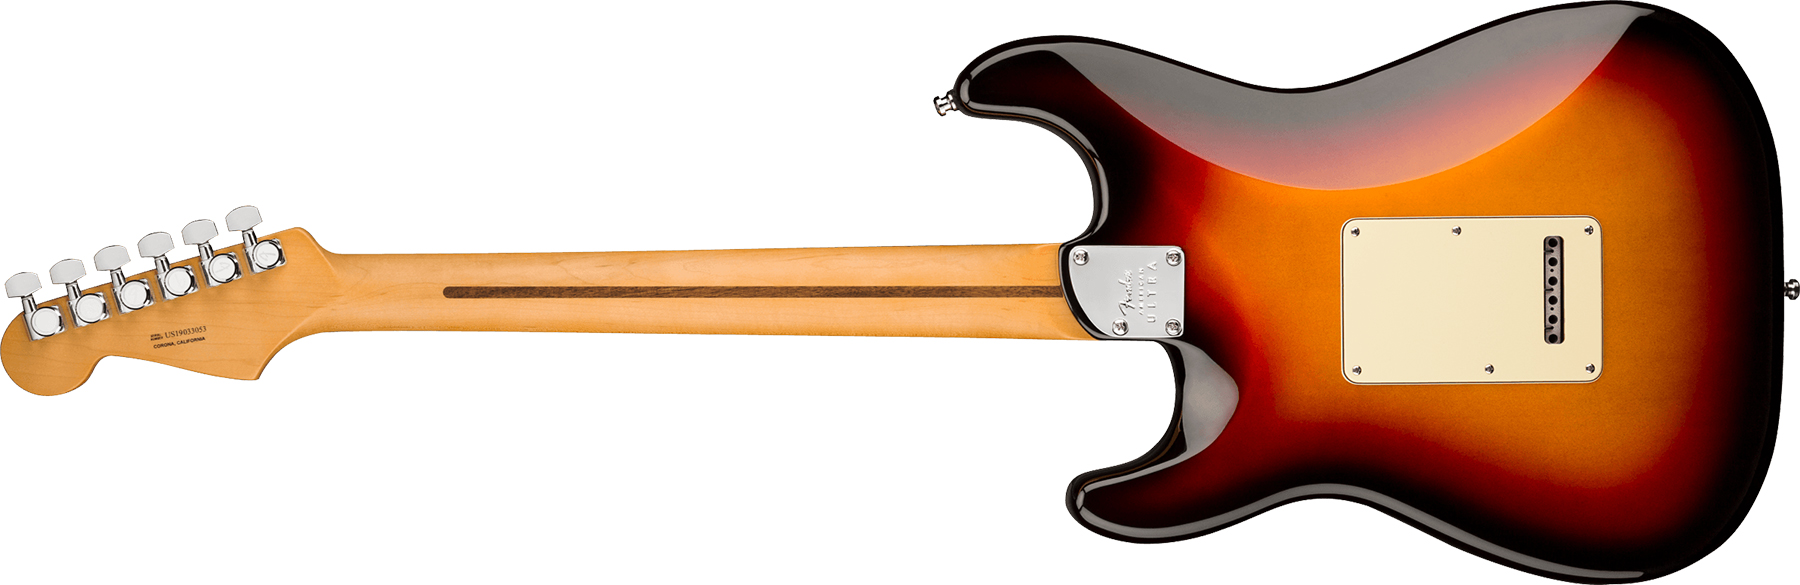 Fender Strat American Ultra 2019 Usa Mn - Ultraburst - Str shape electric guitar - Variation 1